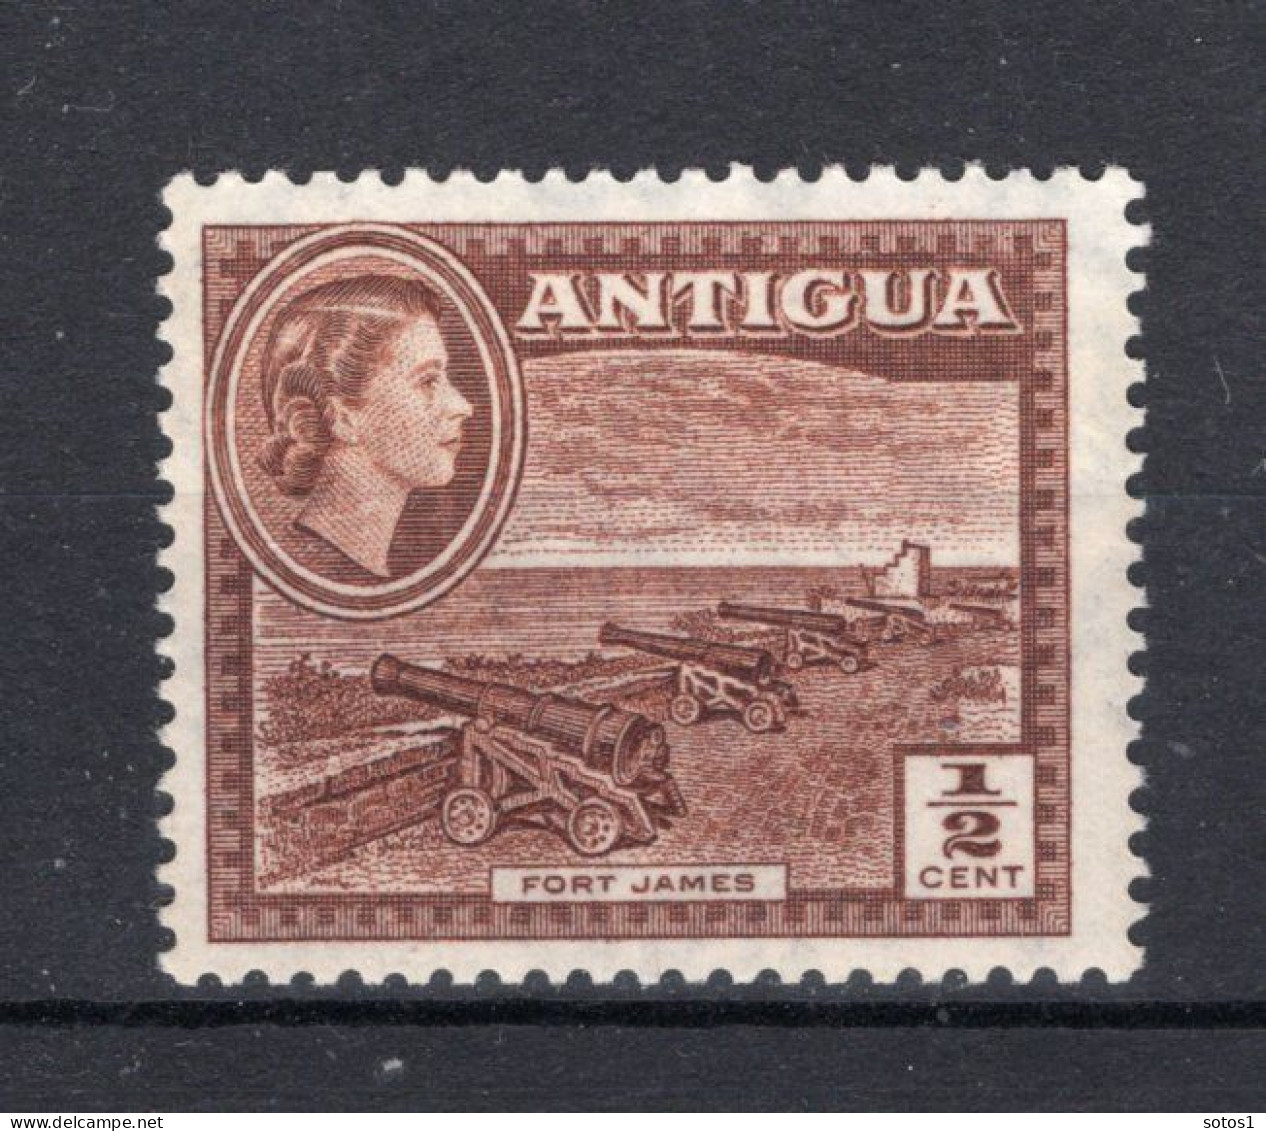 ANTIGUA Yt. 103A MNH 1954-1956 - 1858-1960 Colonie Britannique